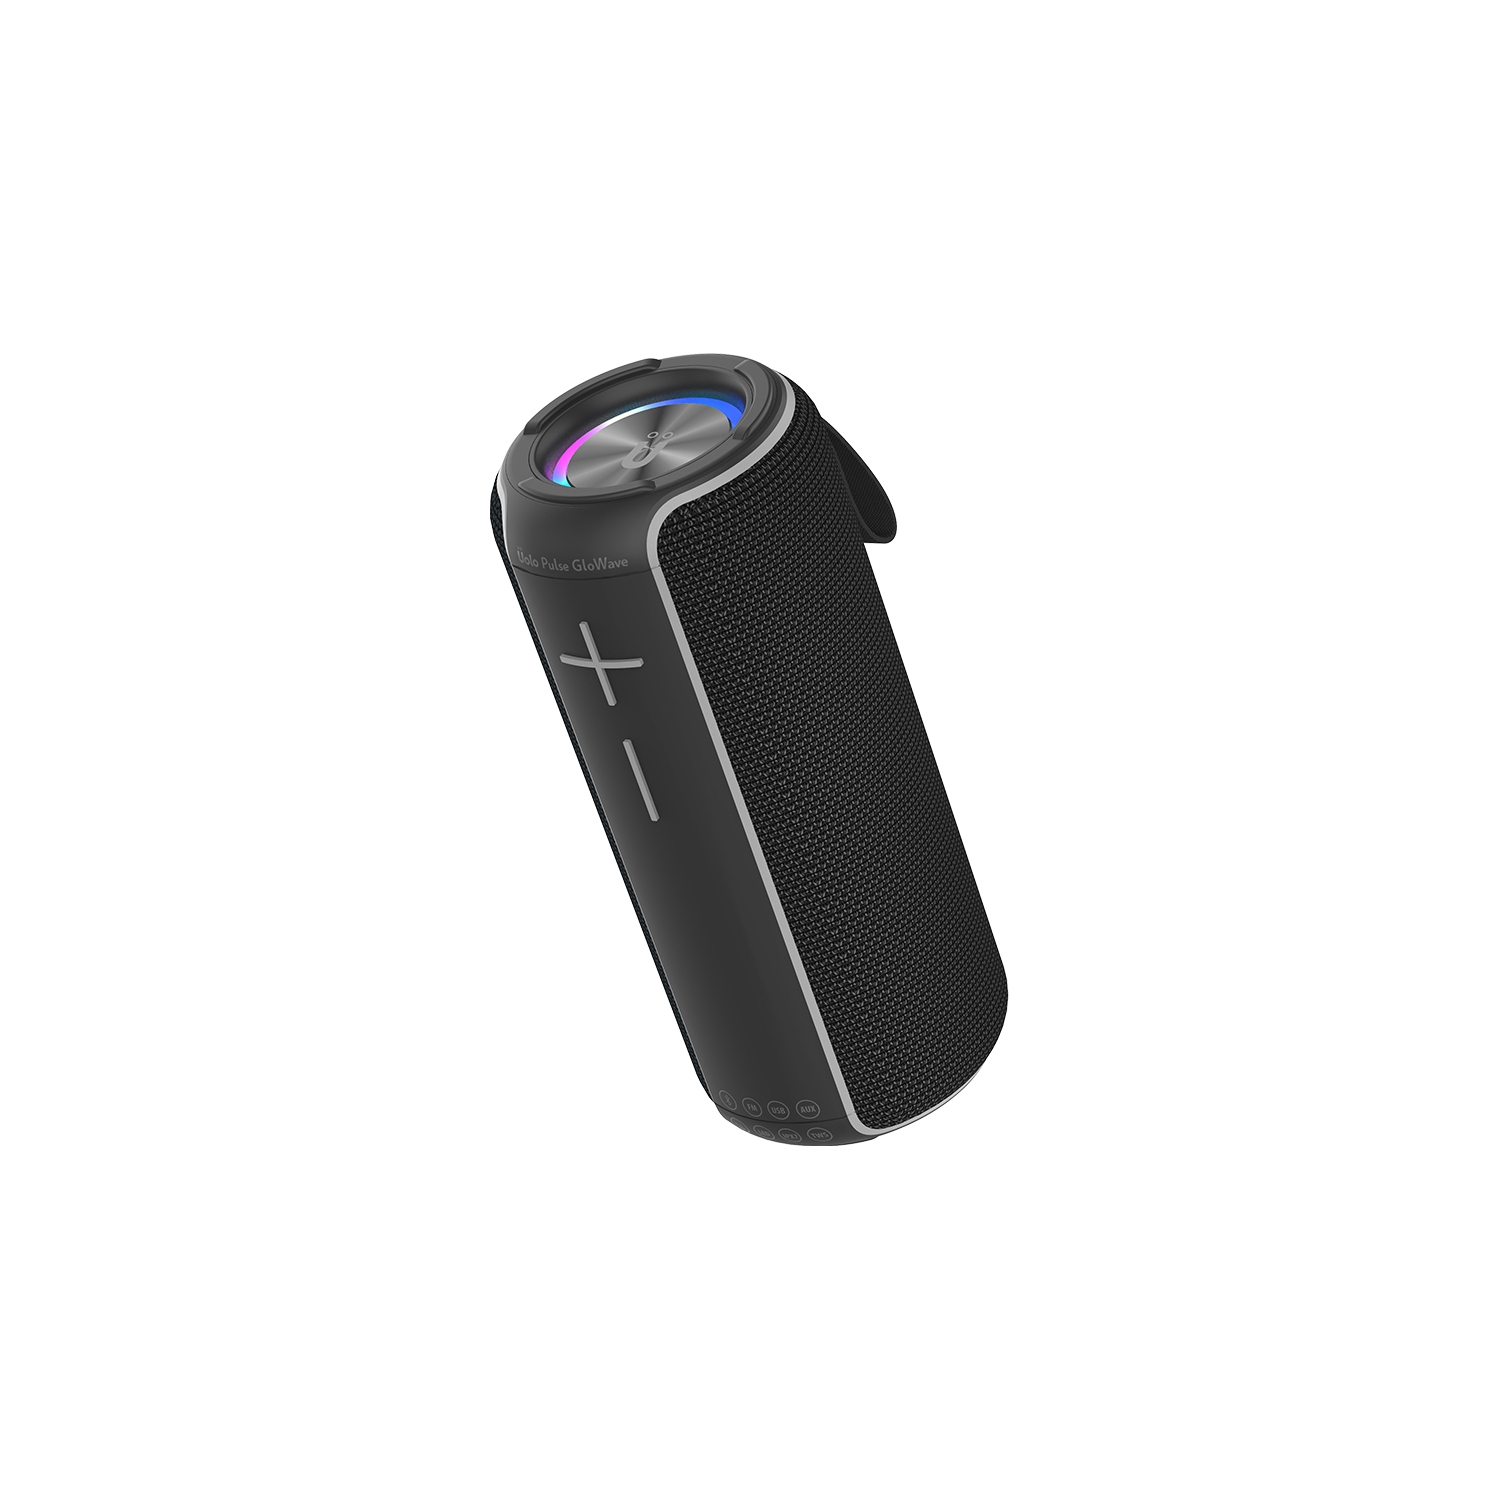 Uolo Pulse GloWave Portable Bluetooth Wireless Speaker - IPX7 Waterproof Bluetooth Speaker/FM Radio Portable Speaker – Black/Grey